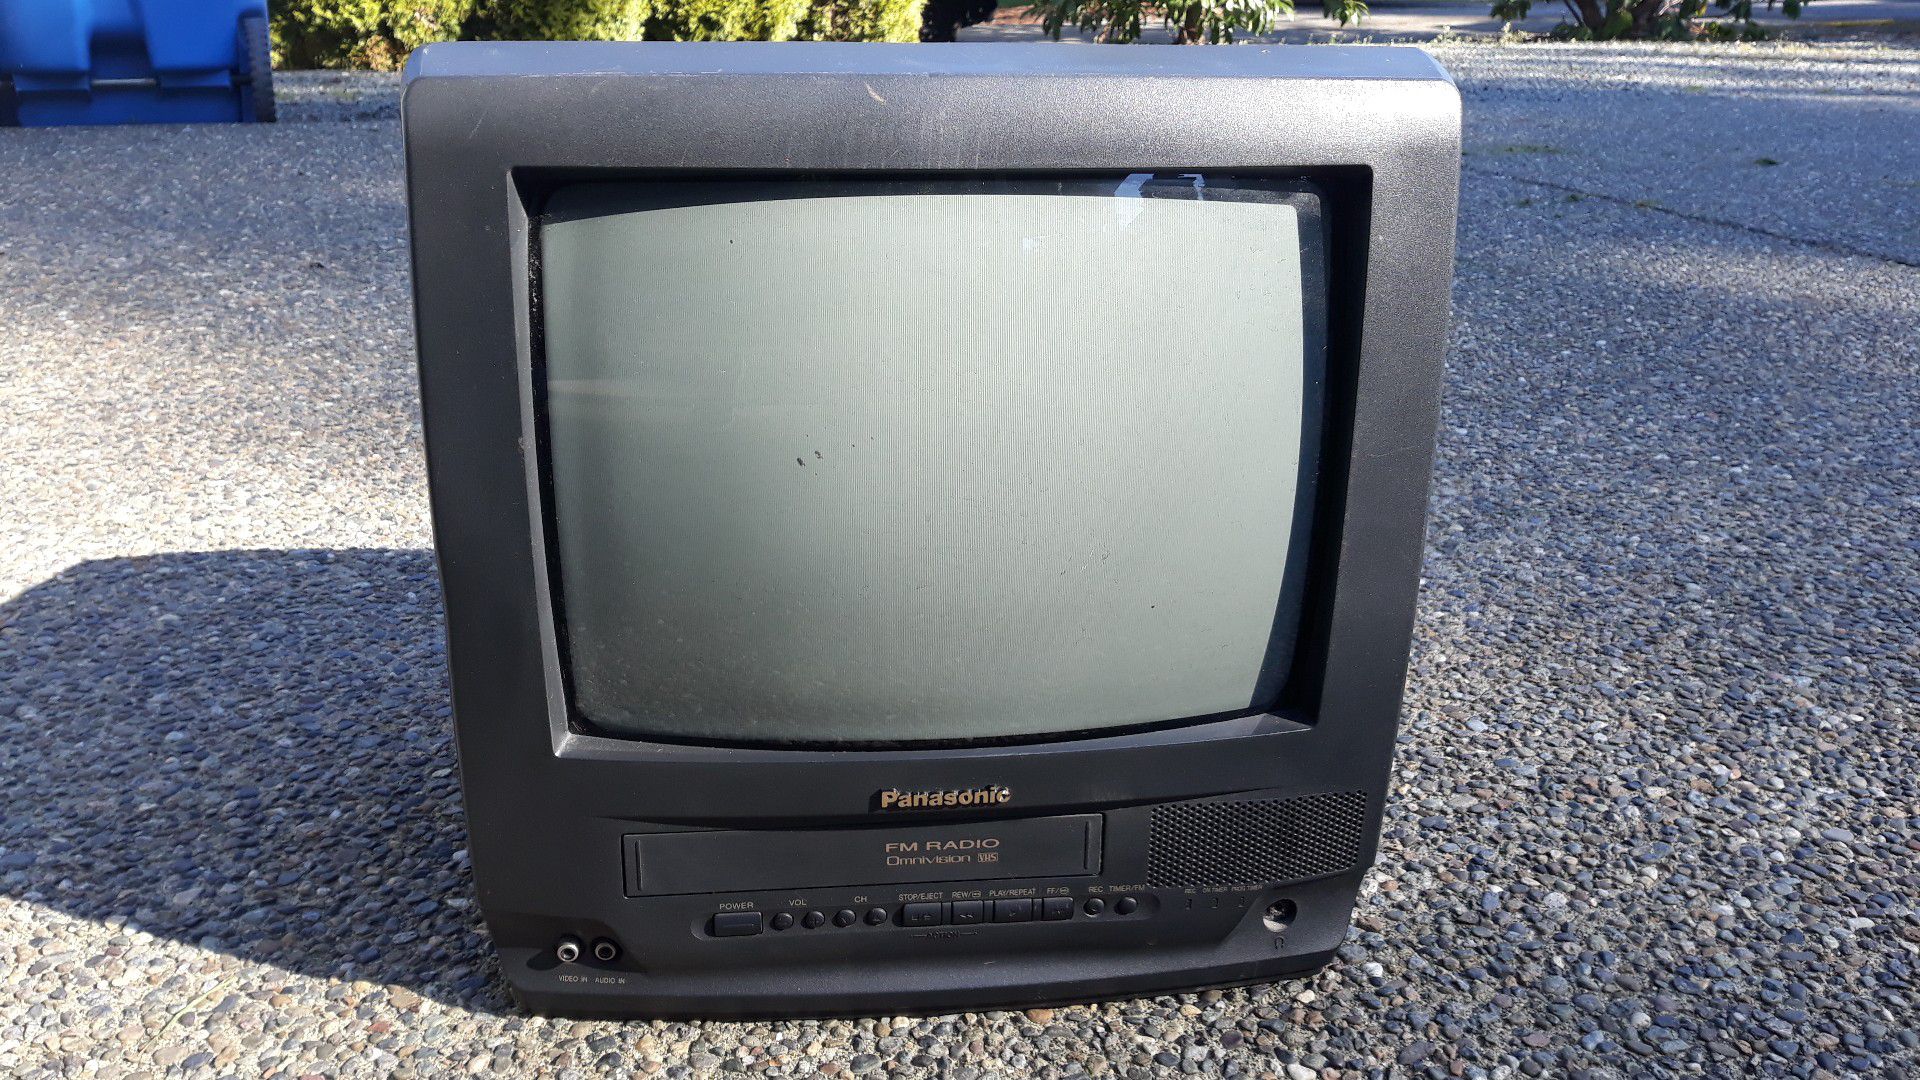 Panasonic 13" VHS TV